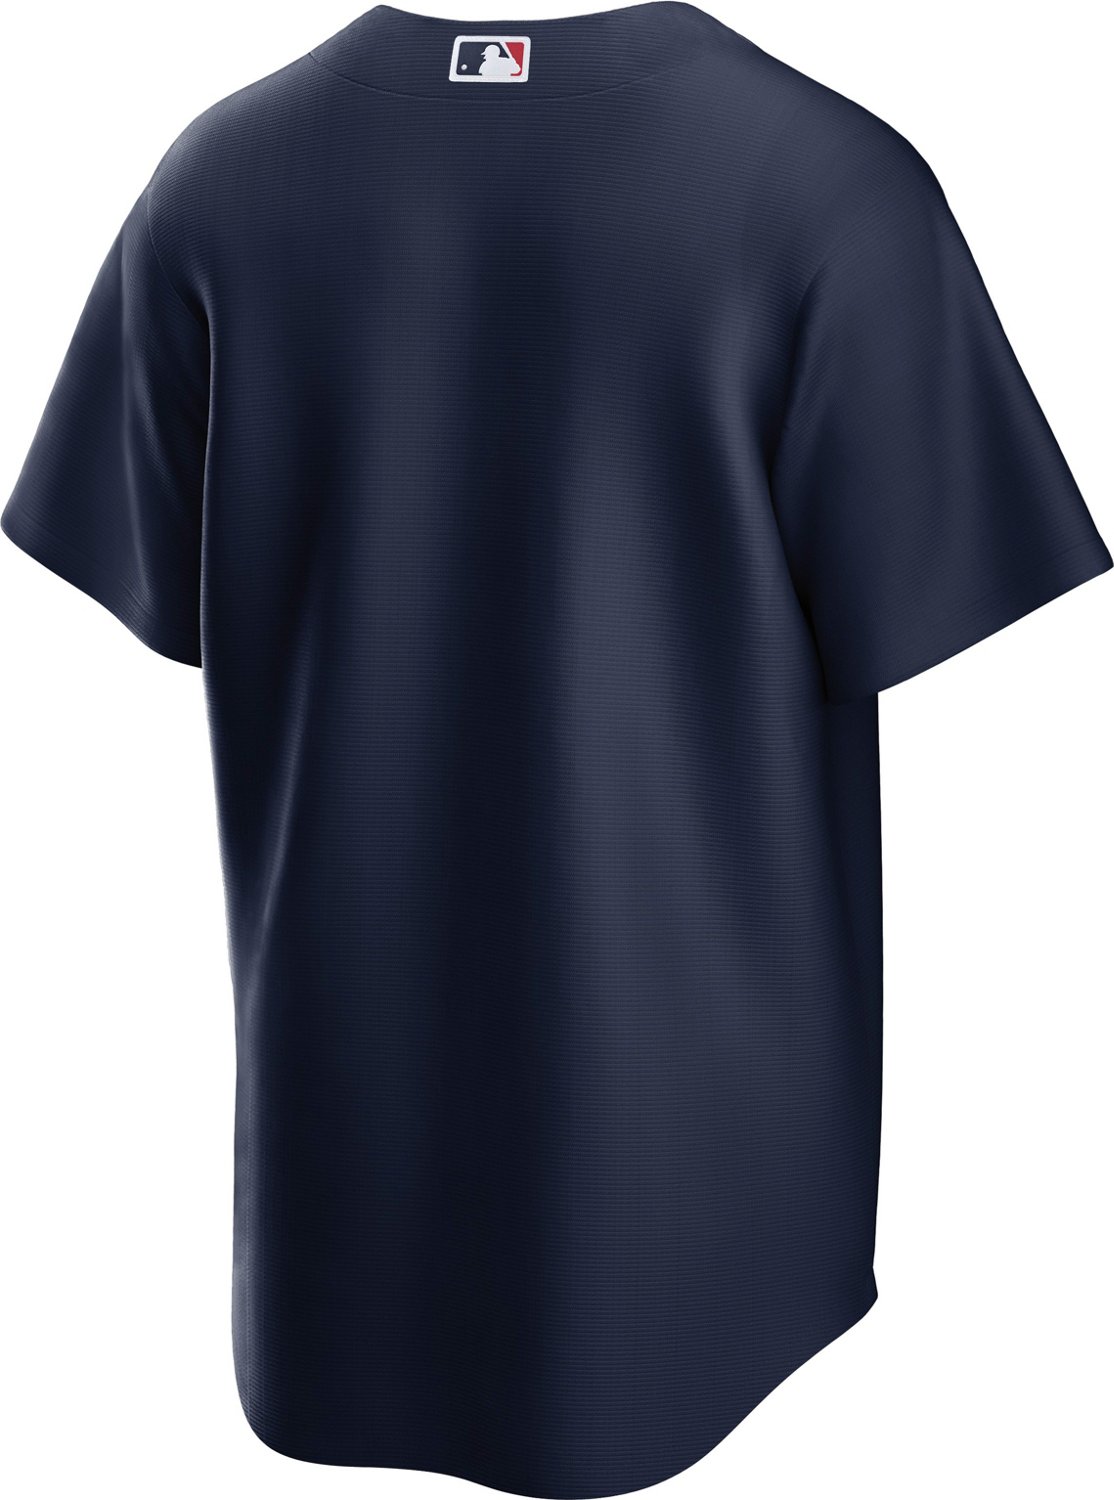 Atlanta Braves Spring Training 2023 Tee Shirt 12M / Navy Blue